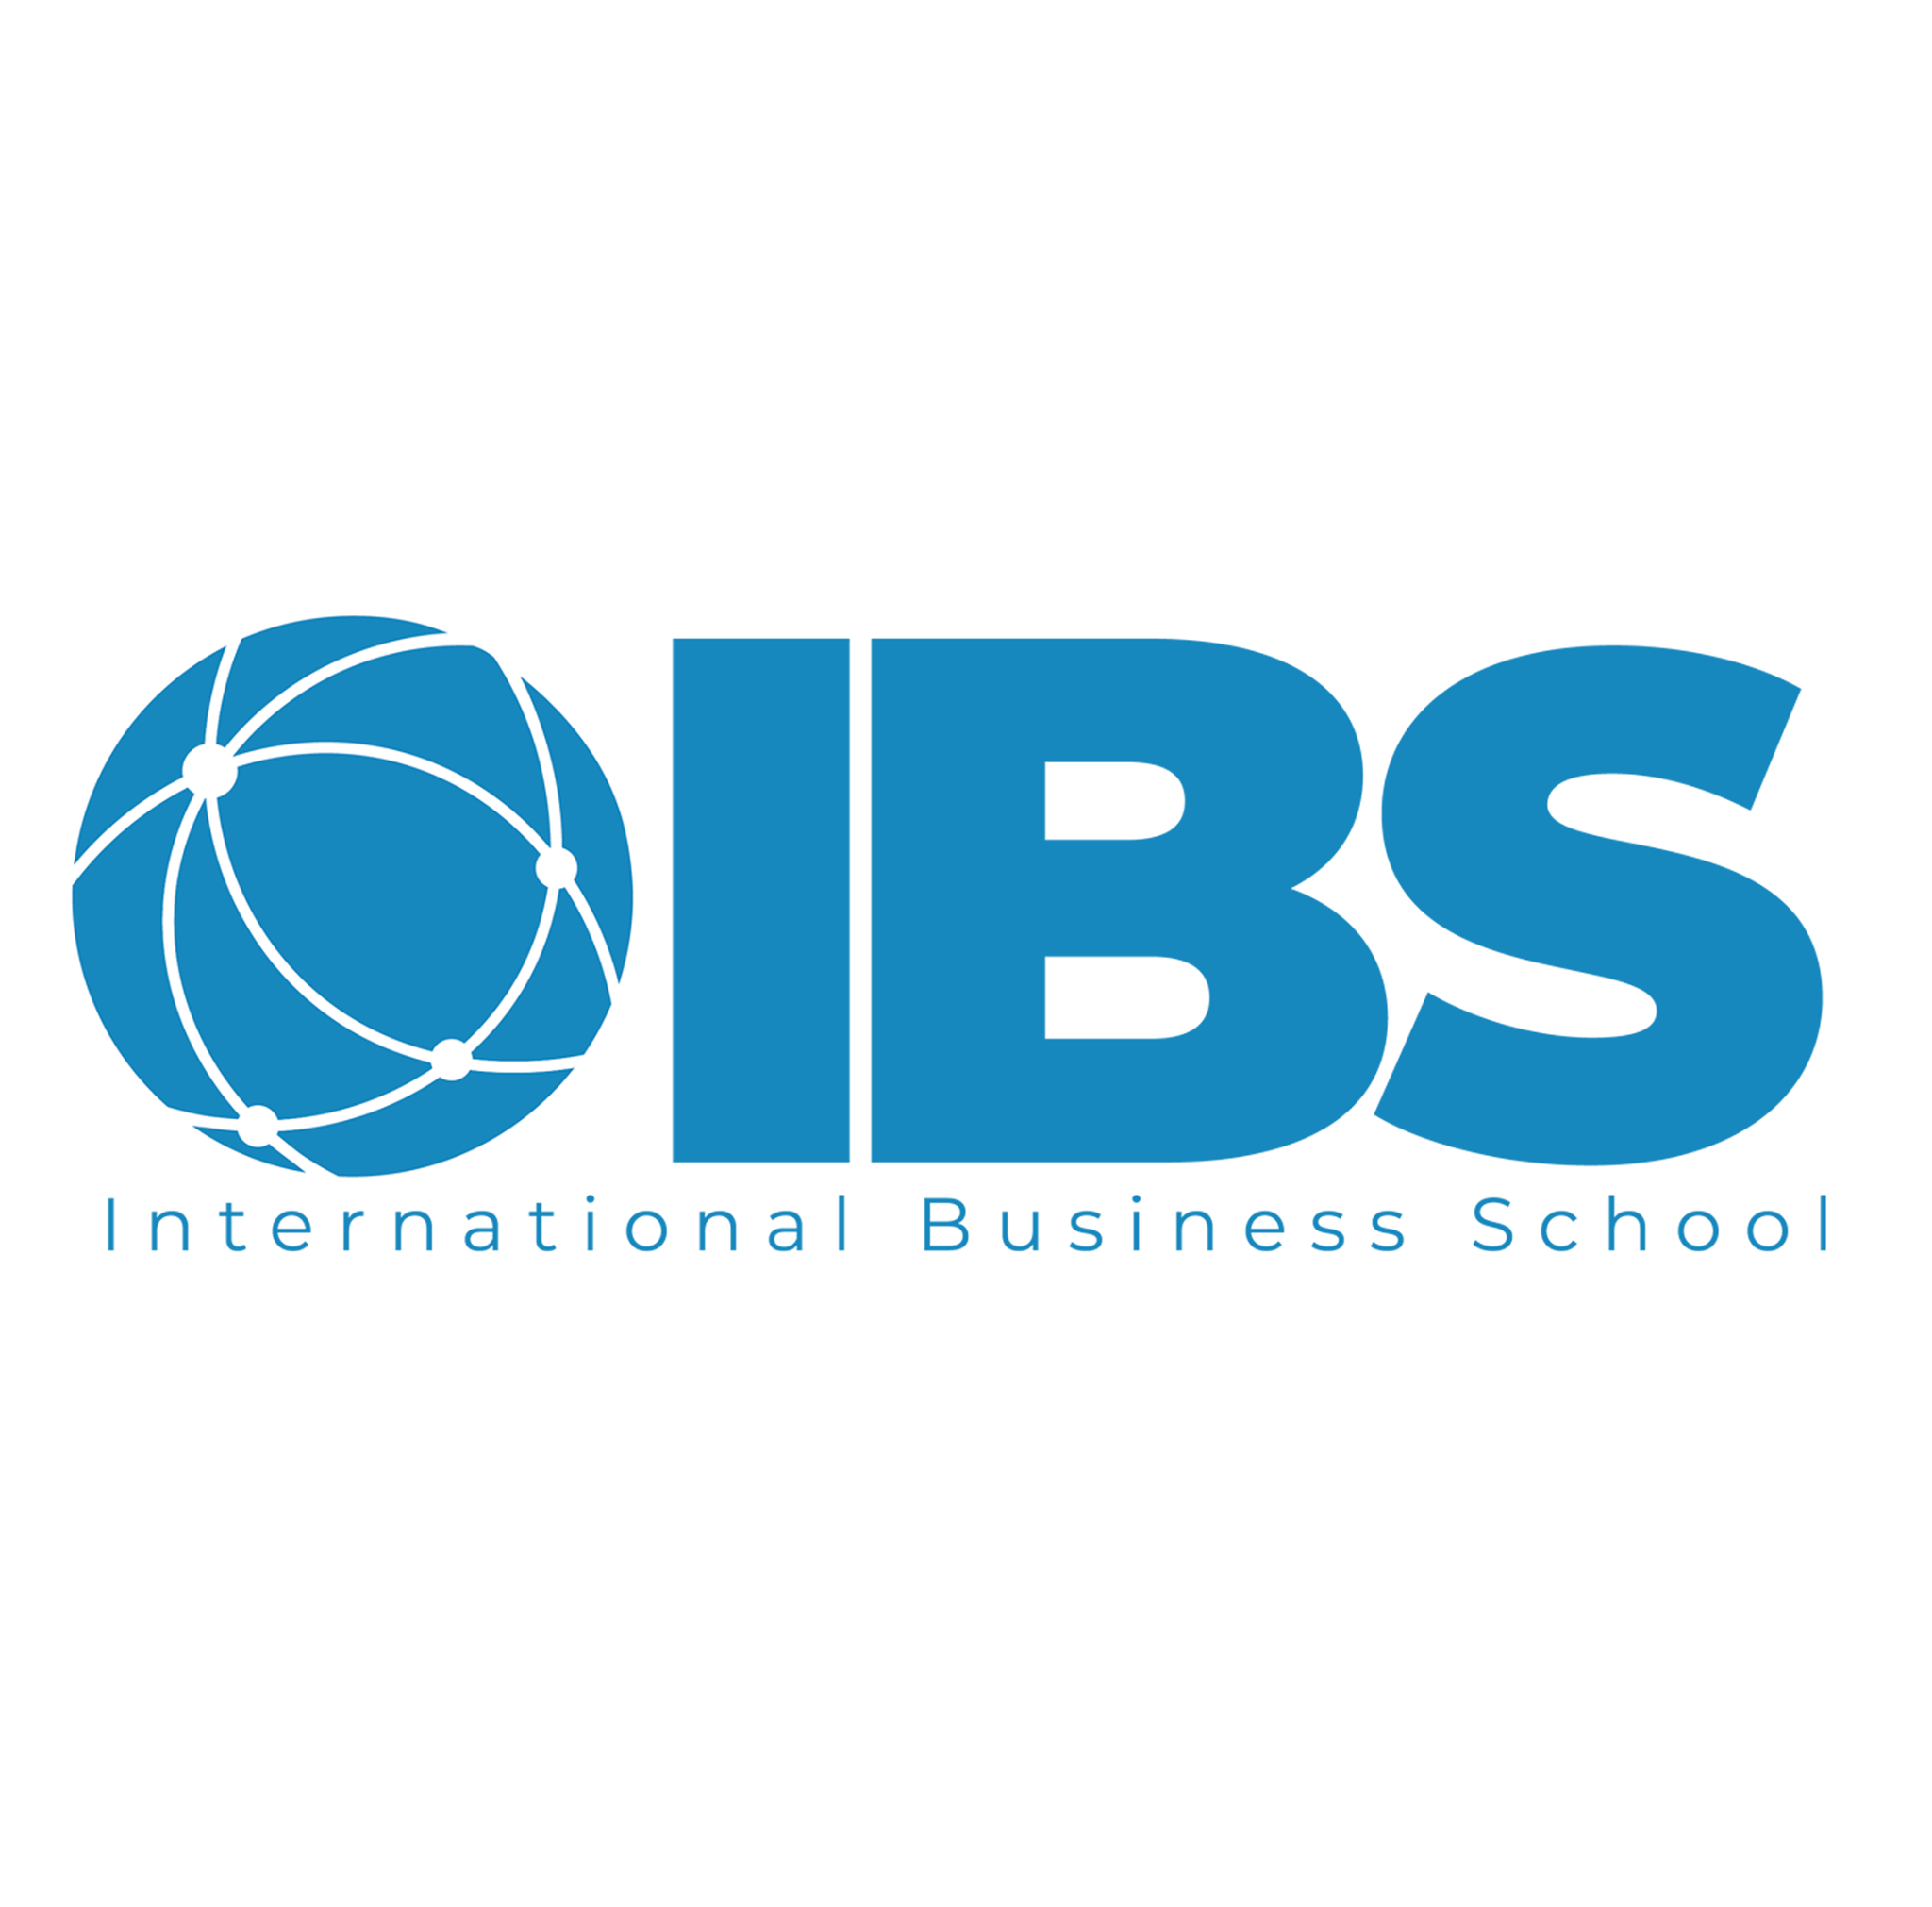 International Business School